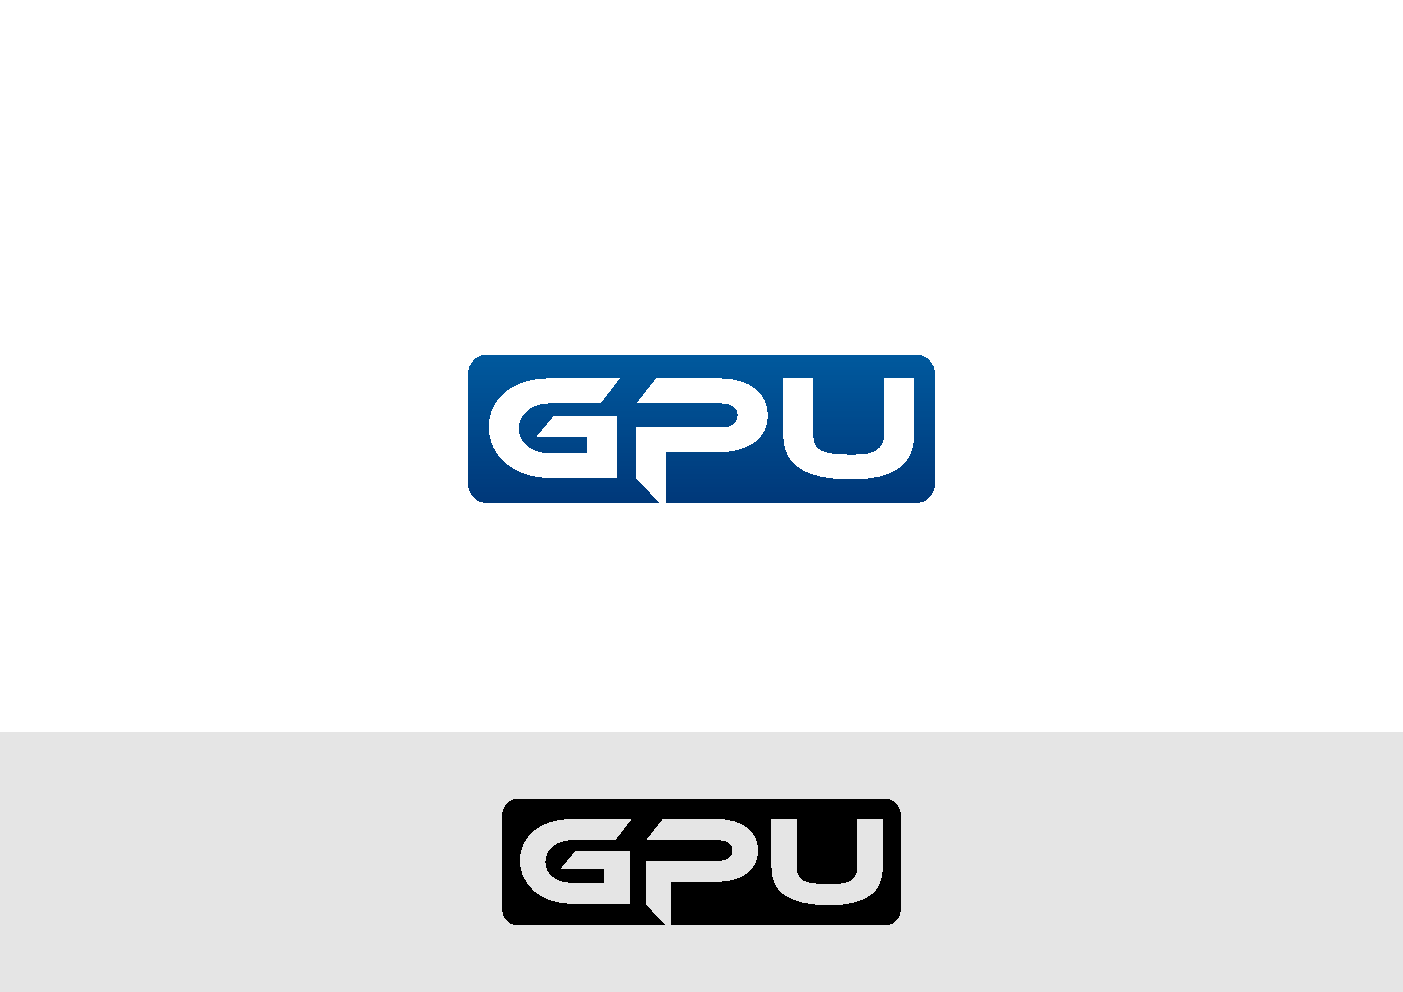 GPU Logo - Bold, Serious Logo Design for a Company by tarato | Design #6119803